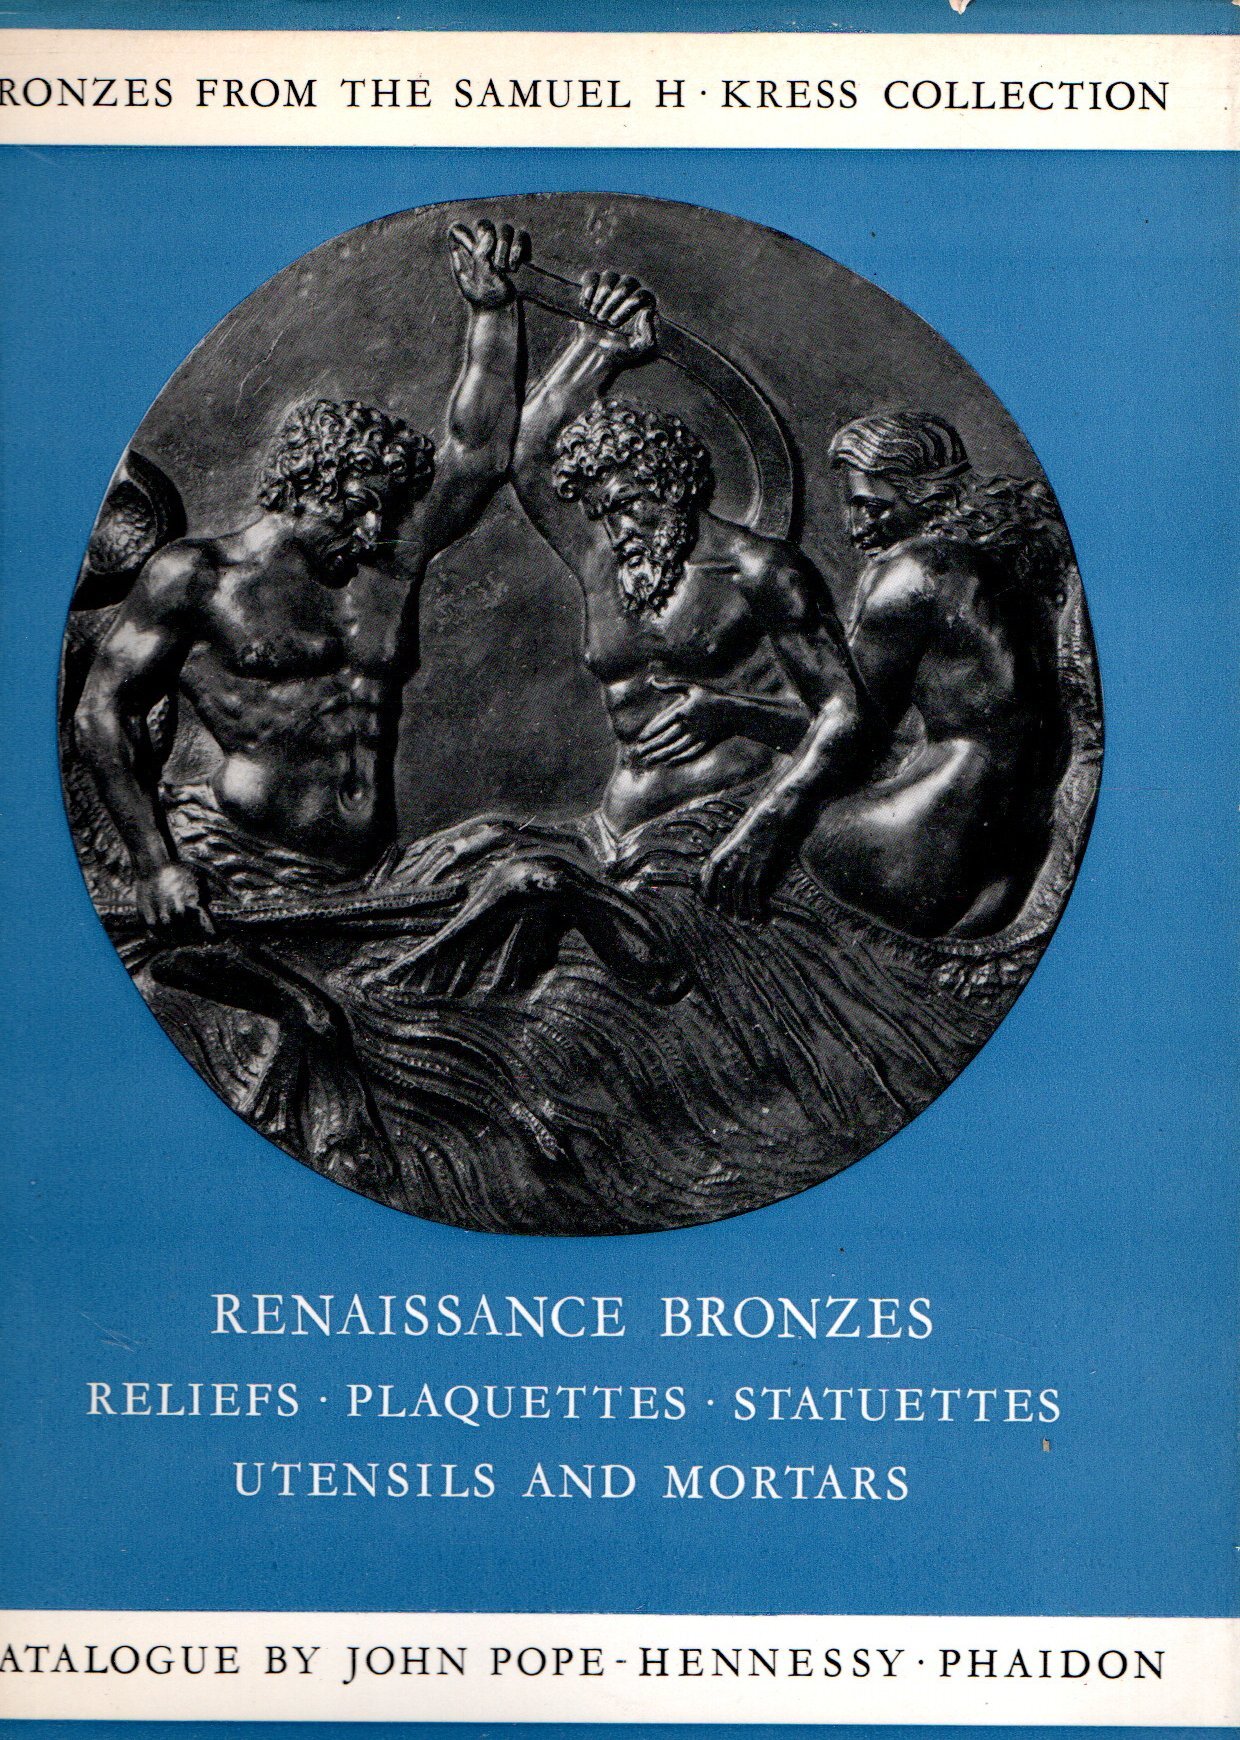 Renaissance Bronzes : from the Samuel H. Kress collection